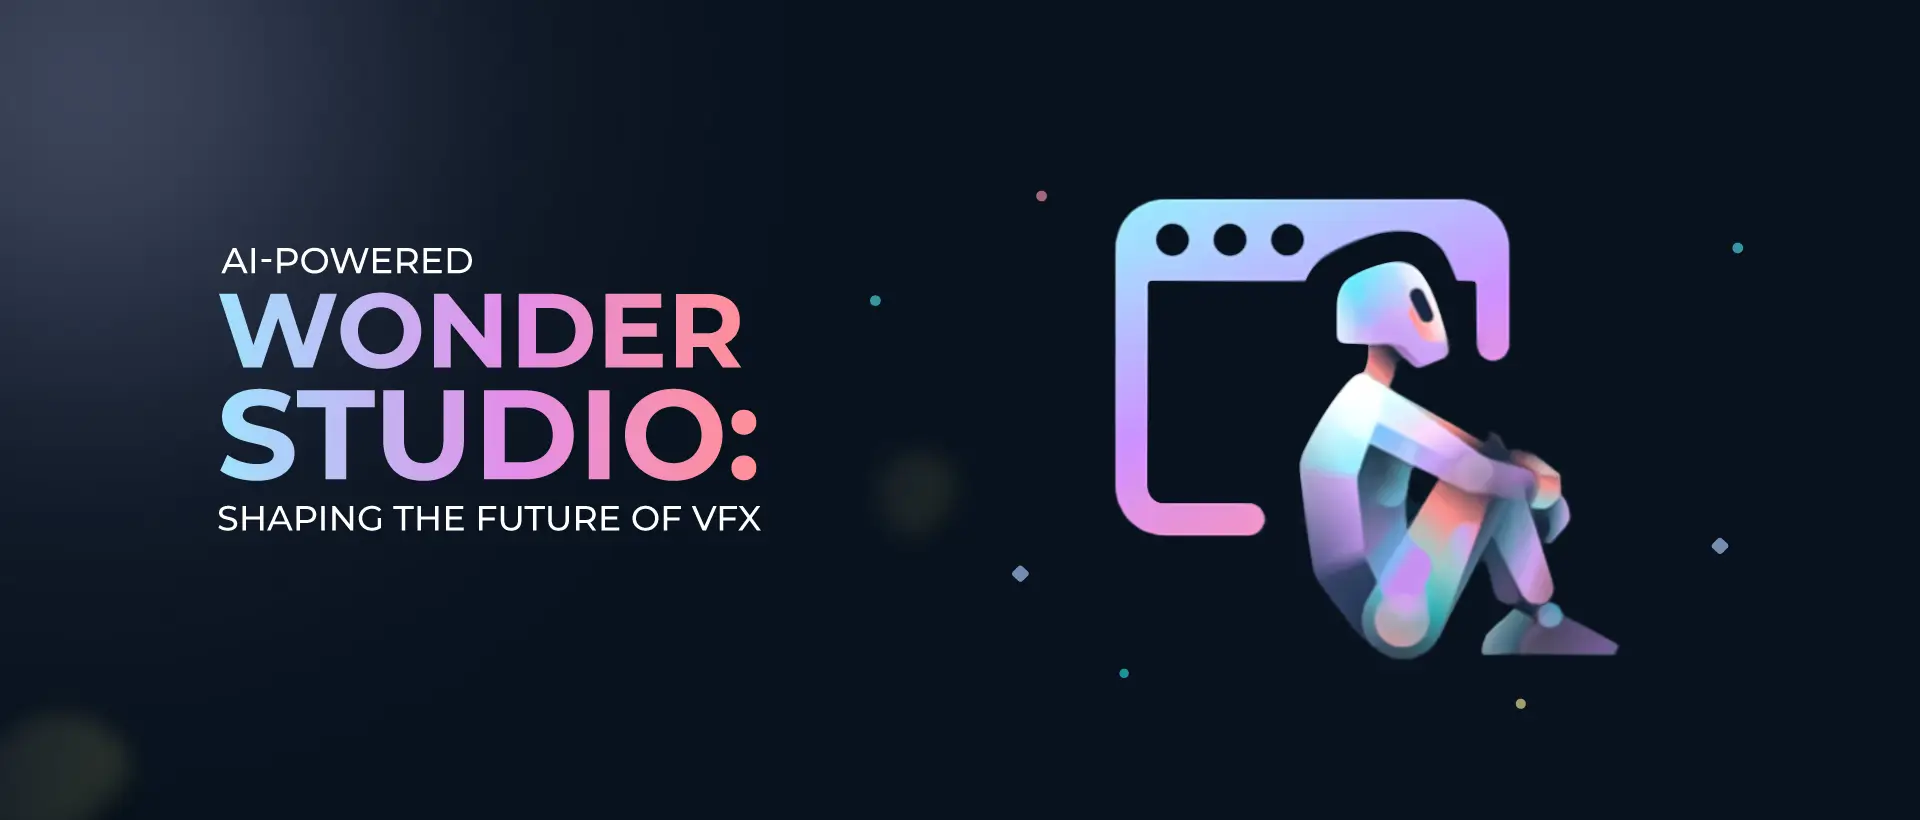 AI-Powered Wonder Studio: Shaping the Future of VFX